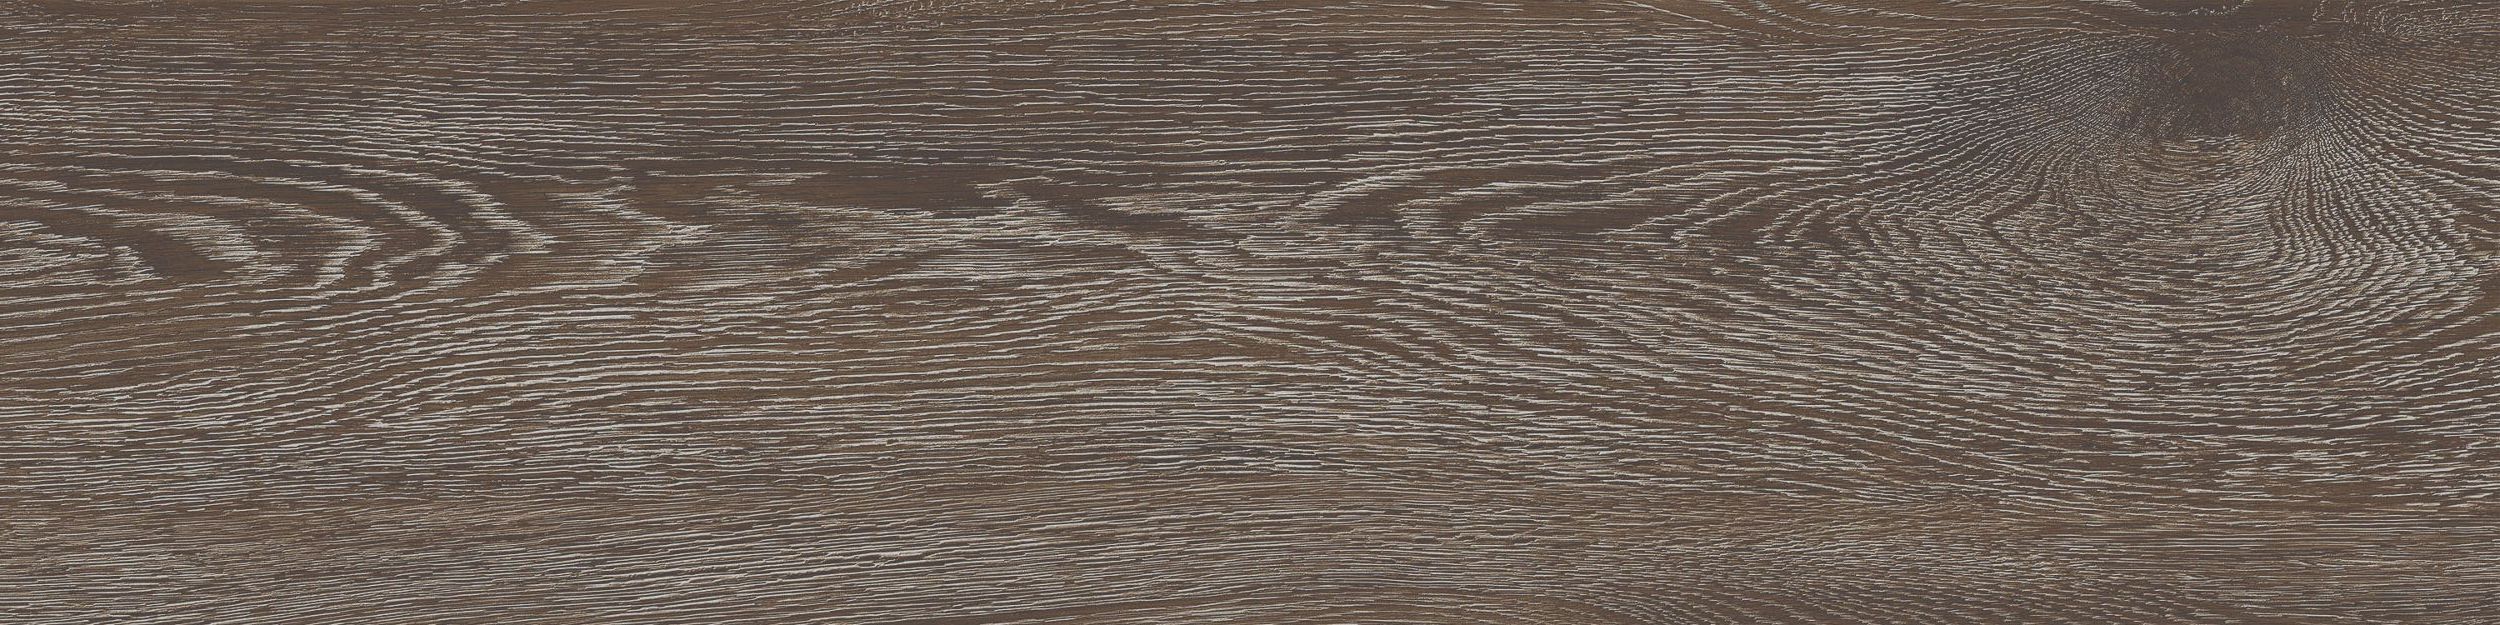 Textured Woodgrains LVT In Antique Gray Oak imagen número 1